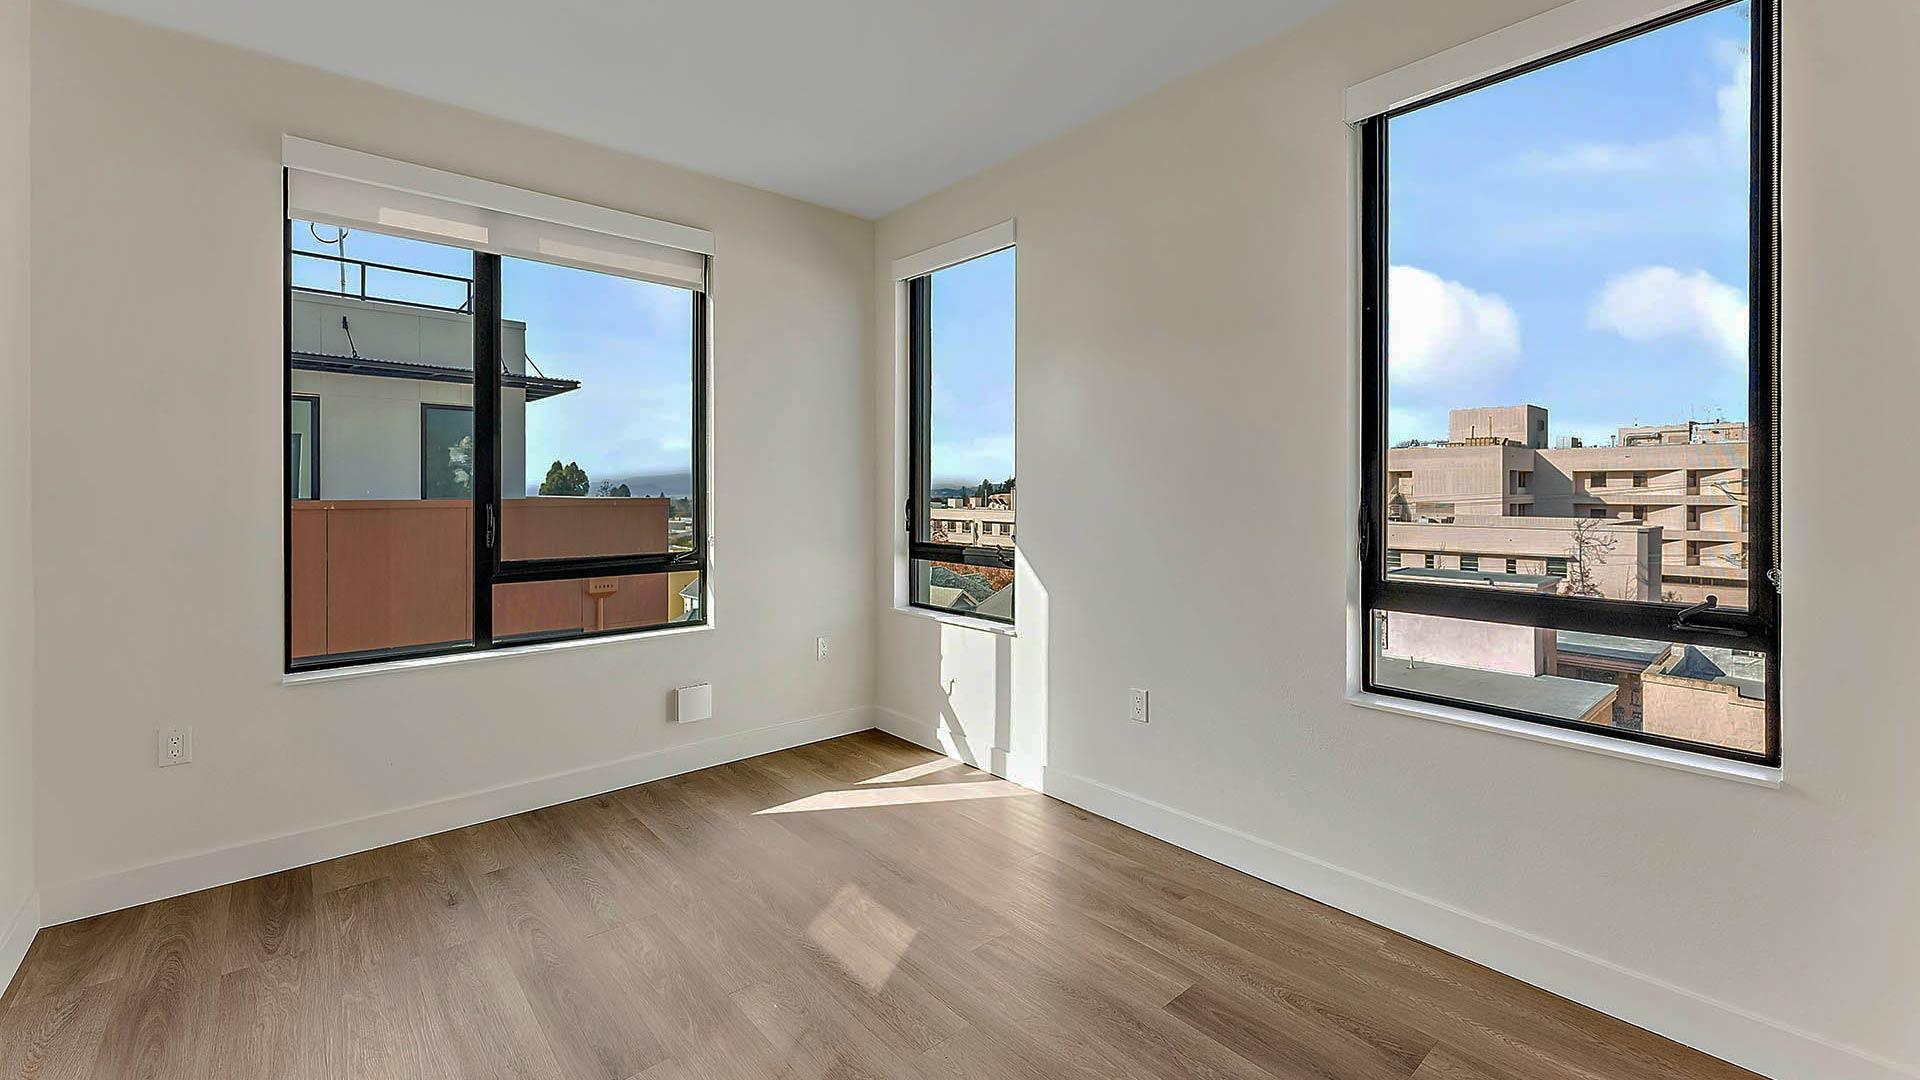 Blake apartments c4 floorplan livingroom view 1